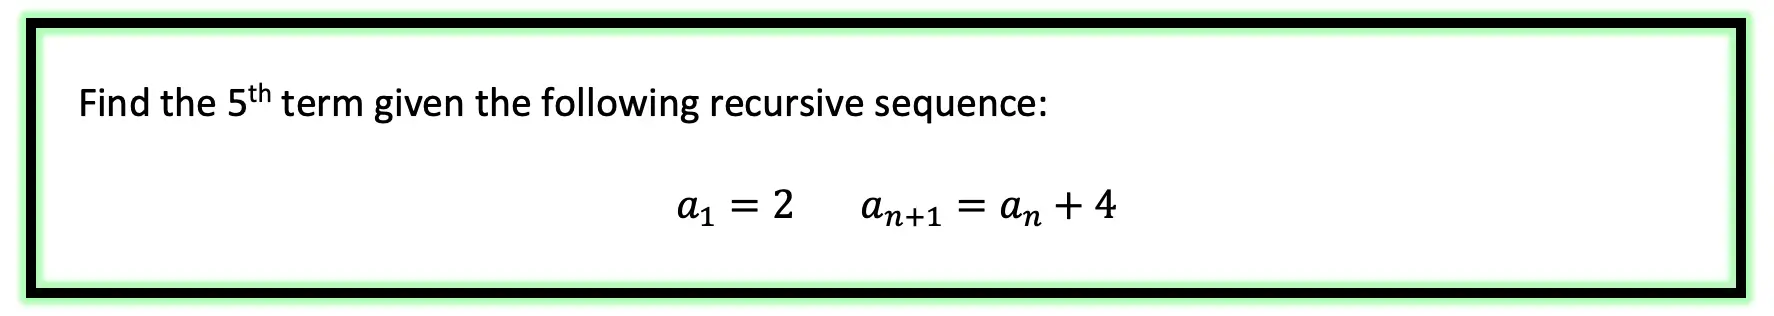 recursive formula